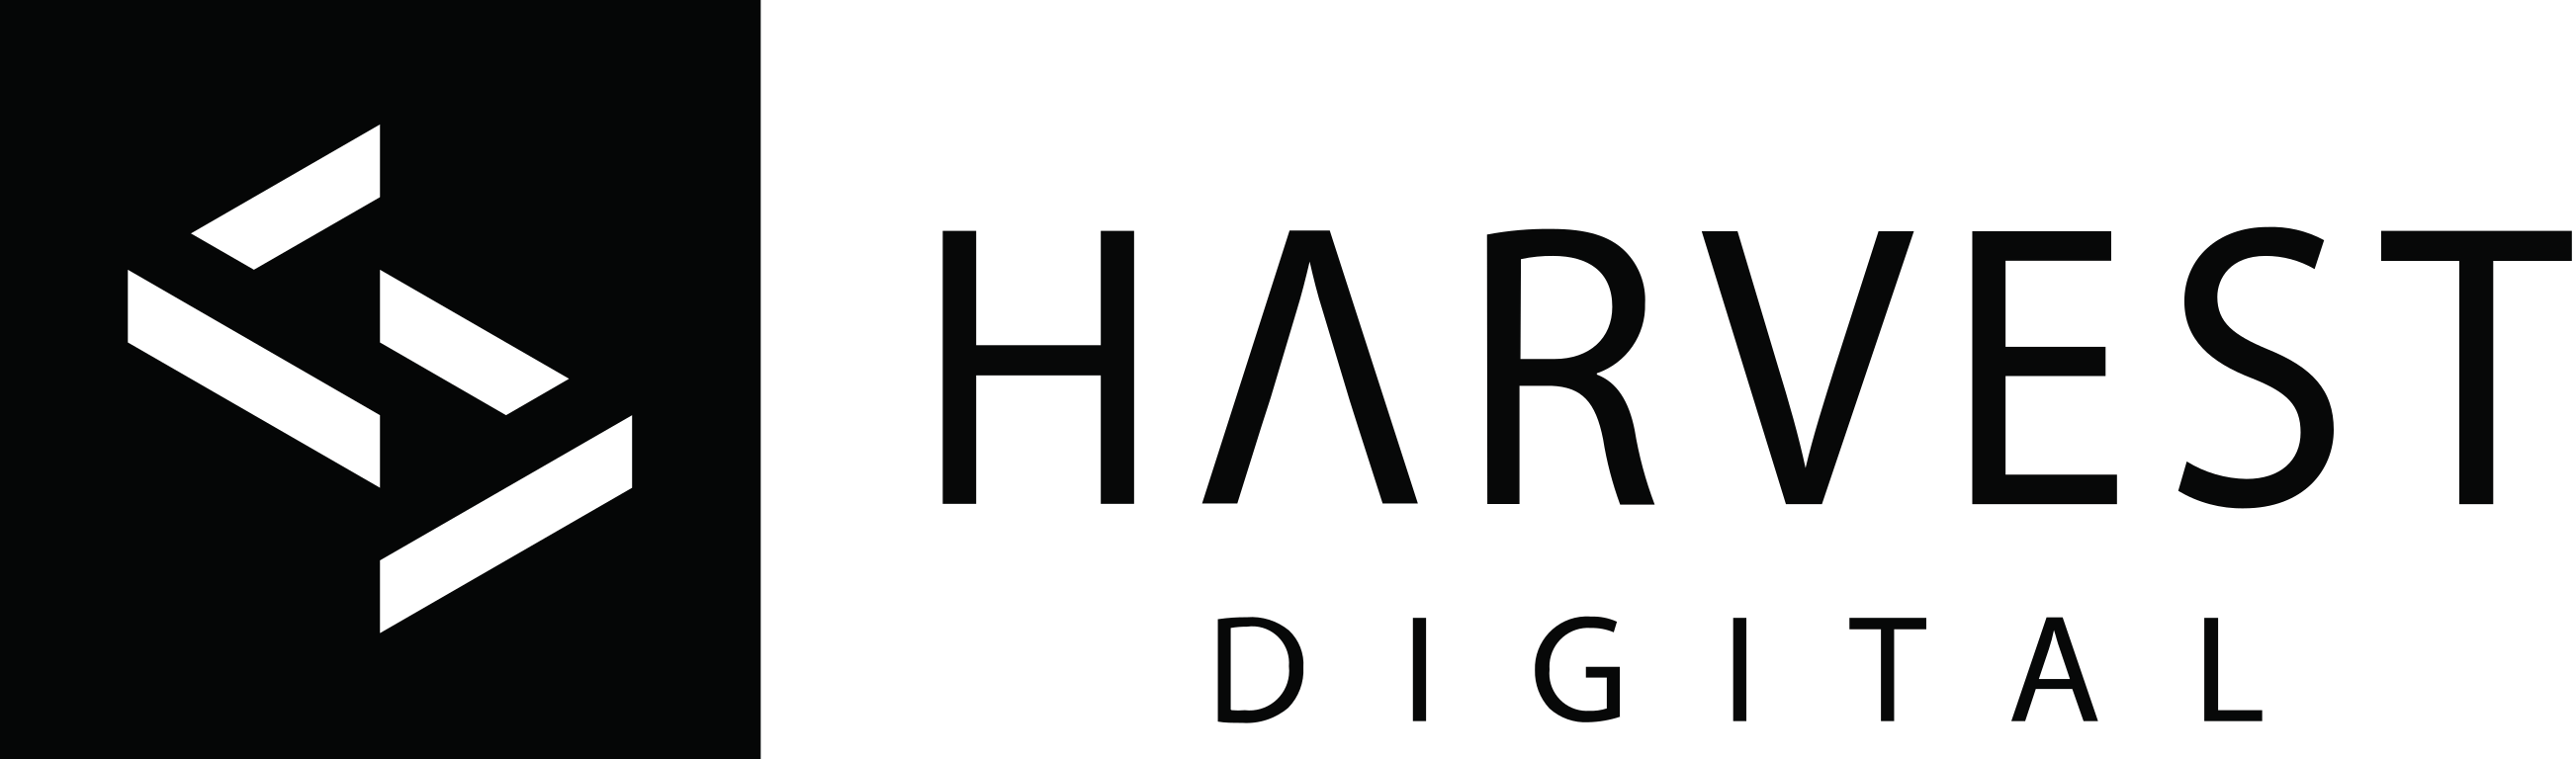 Harvest Digital logo